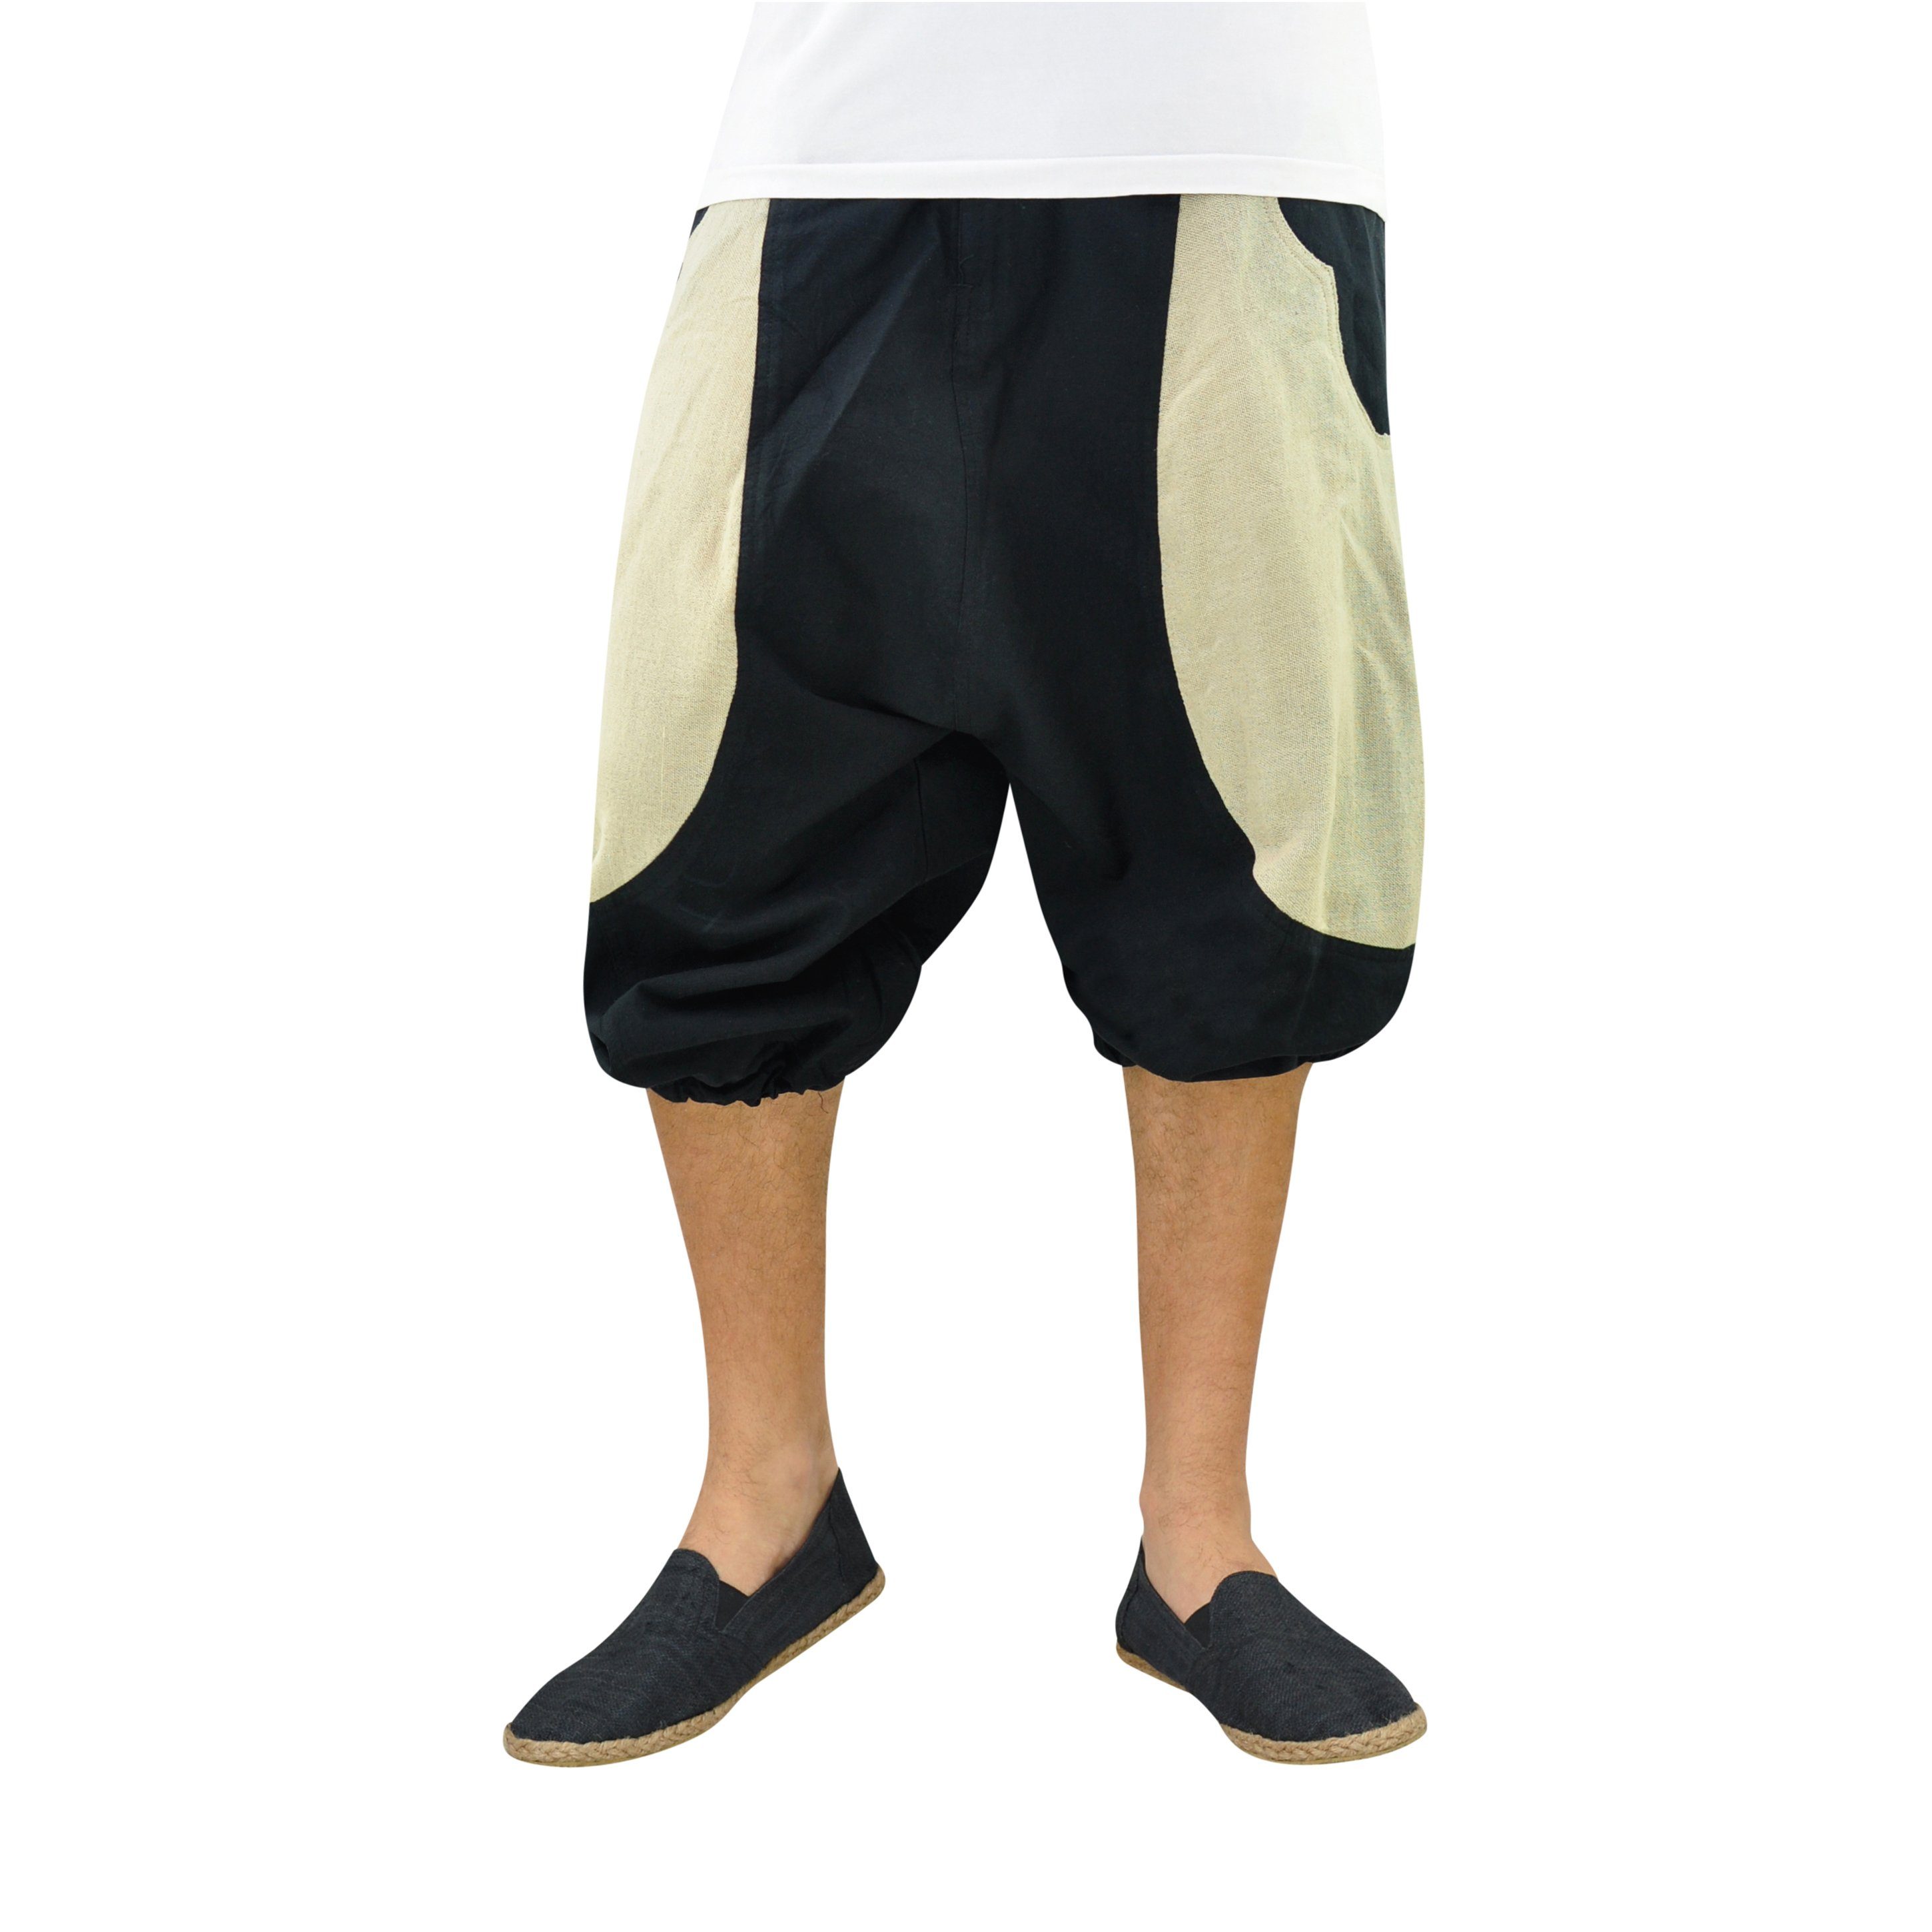 Damen, schwarz fallender Unisex, & Goa Haremshose kurz Farbblock-Design, virblatt Shorts mitteltief Reißverschlusstaschen Haremshose Hose 2 Schritt, kurze Herren